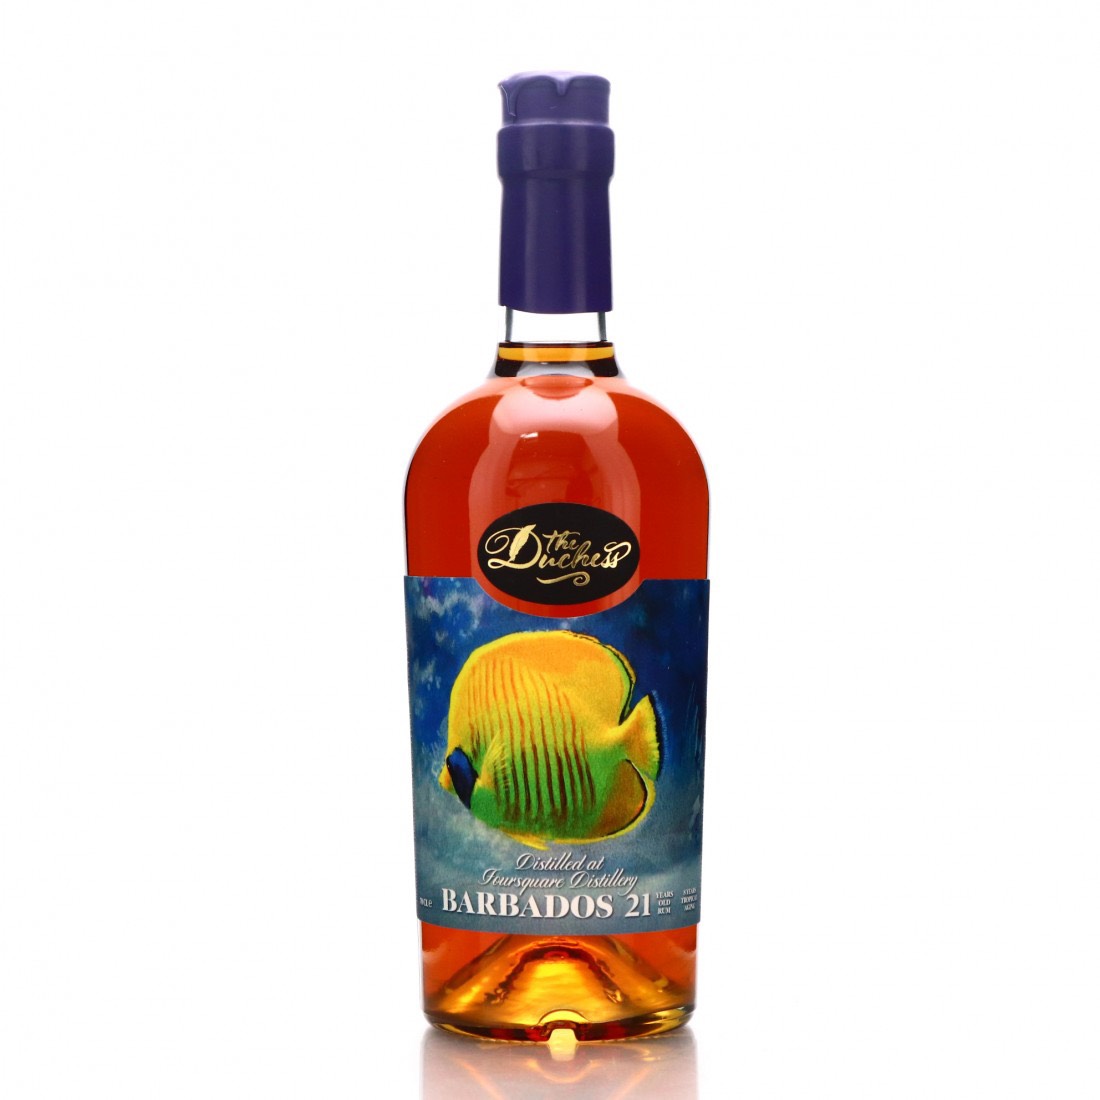 Bottle image of Barbados 21